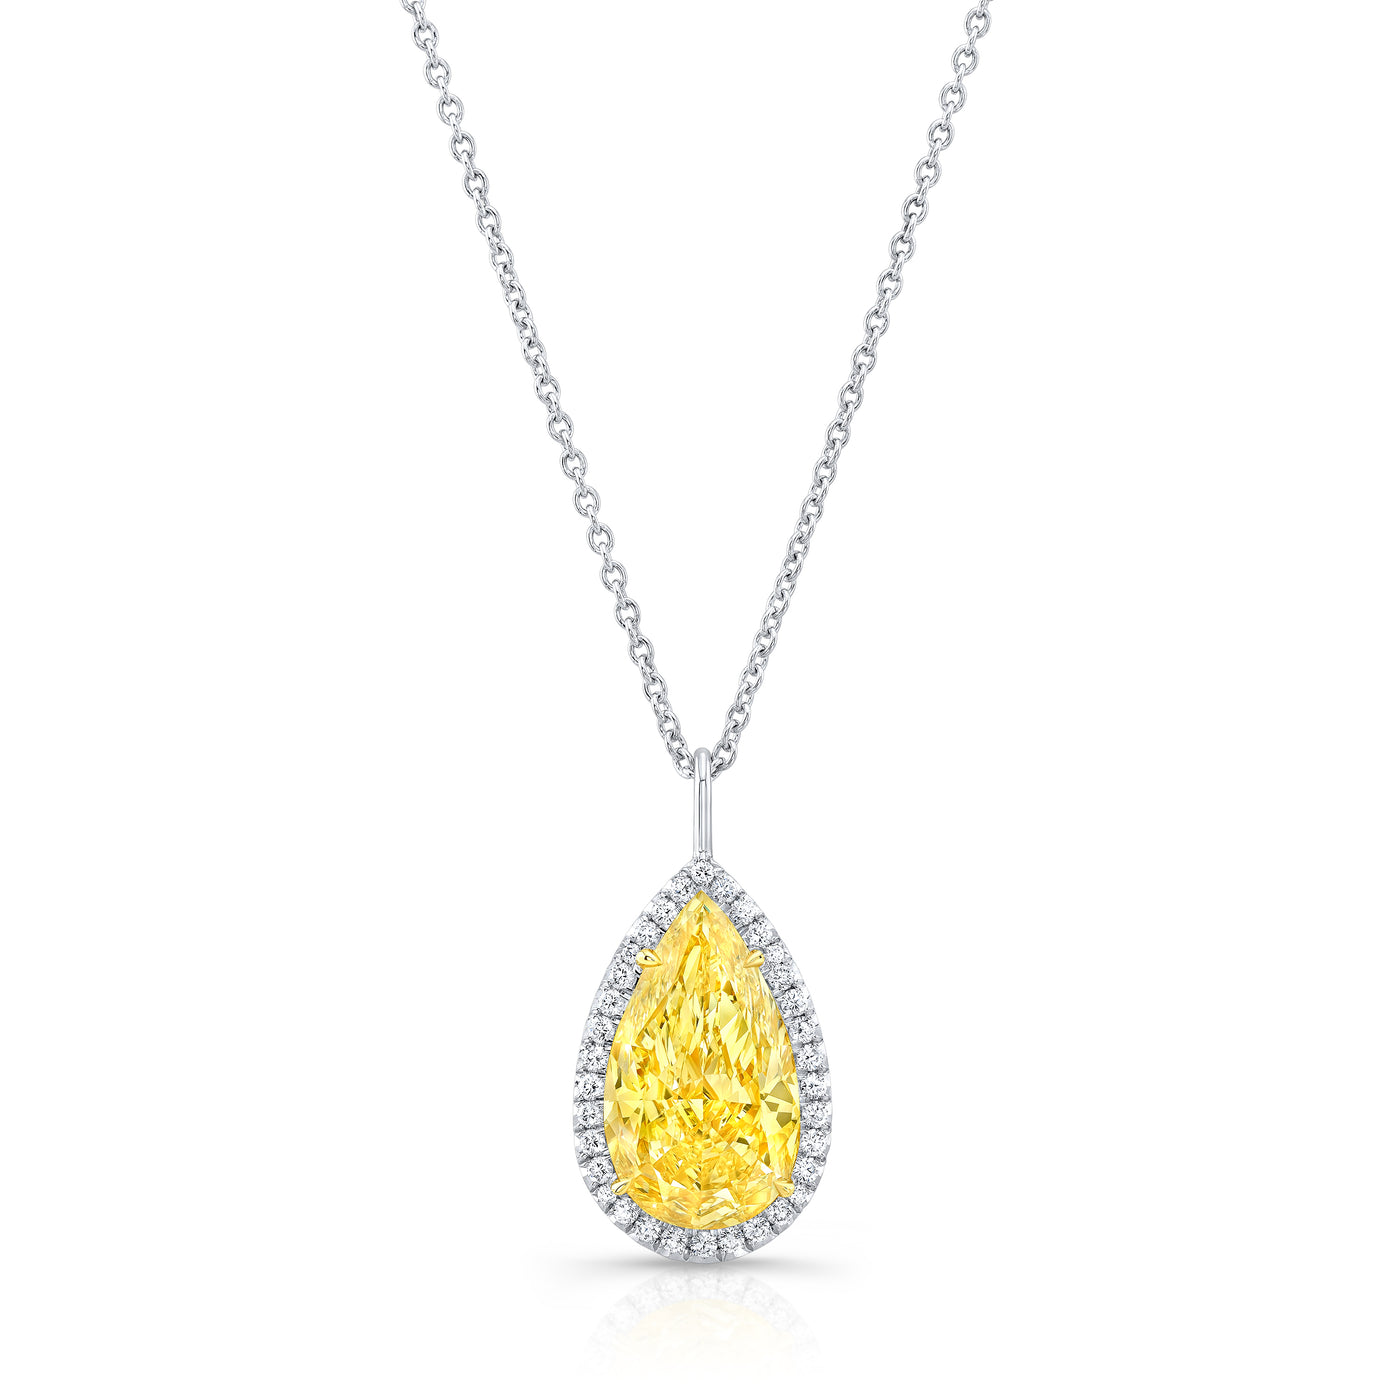 Pear Shaped Fancy Yellow Diamond Pendant on Chain